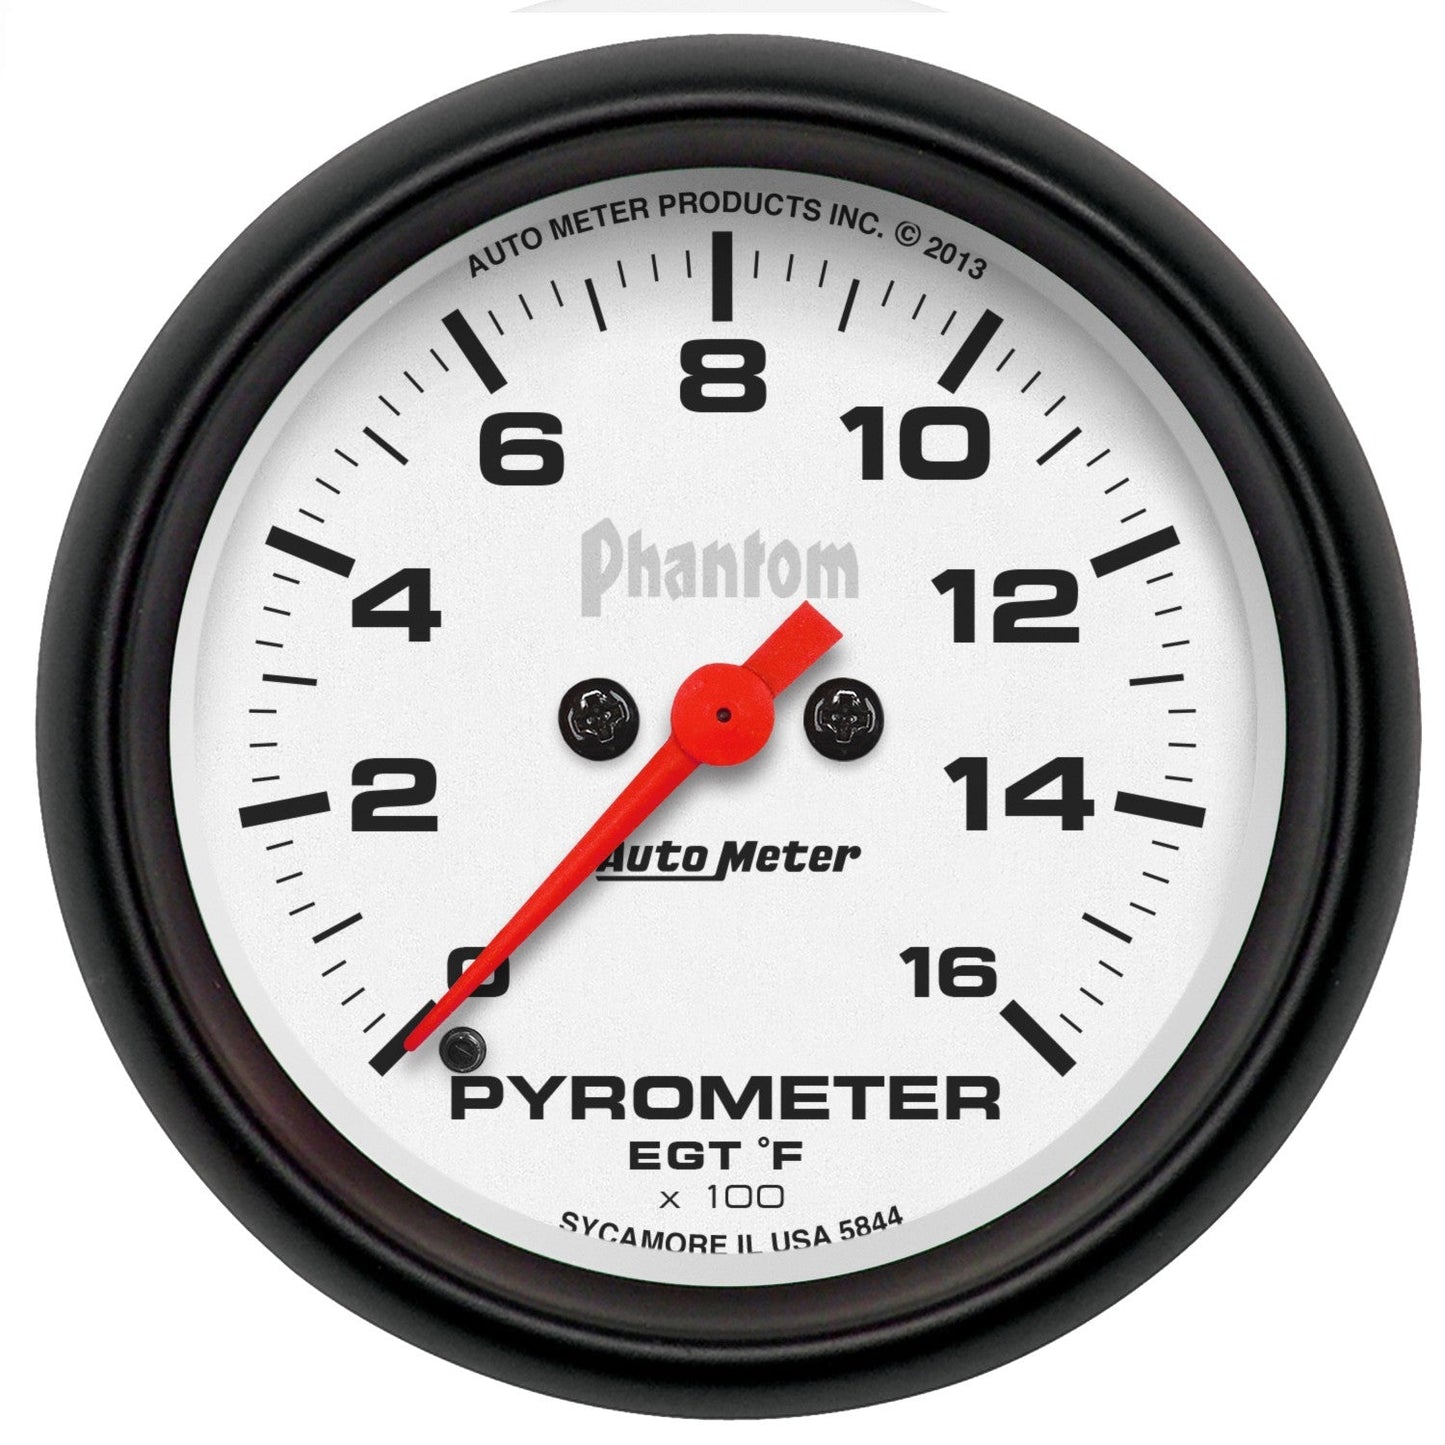 AutoMeter - PIRÓMETRO DE 2-5/8", 0-1600 °F, MOTOR PASO A PASO, FANTASMA (5844)